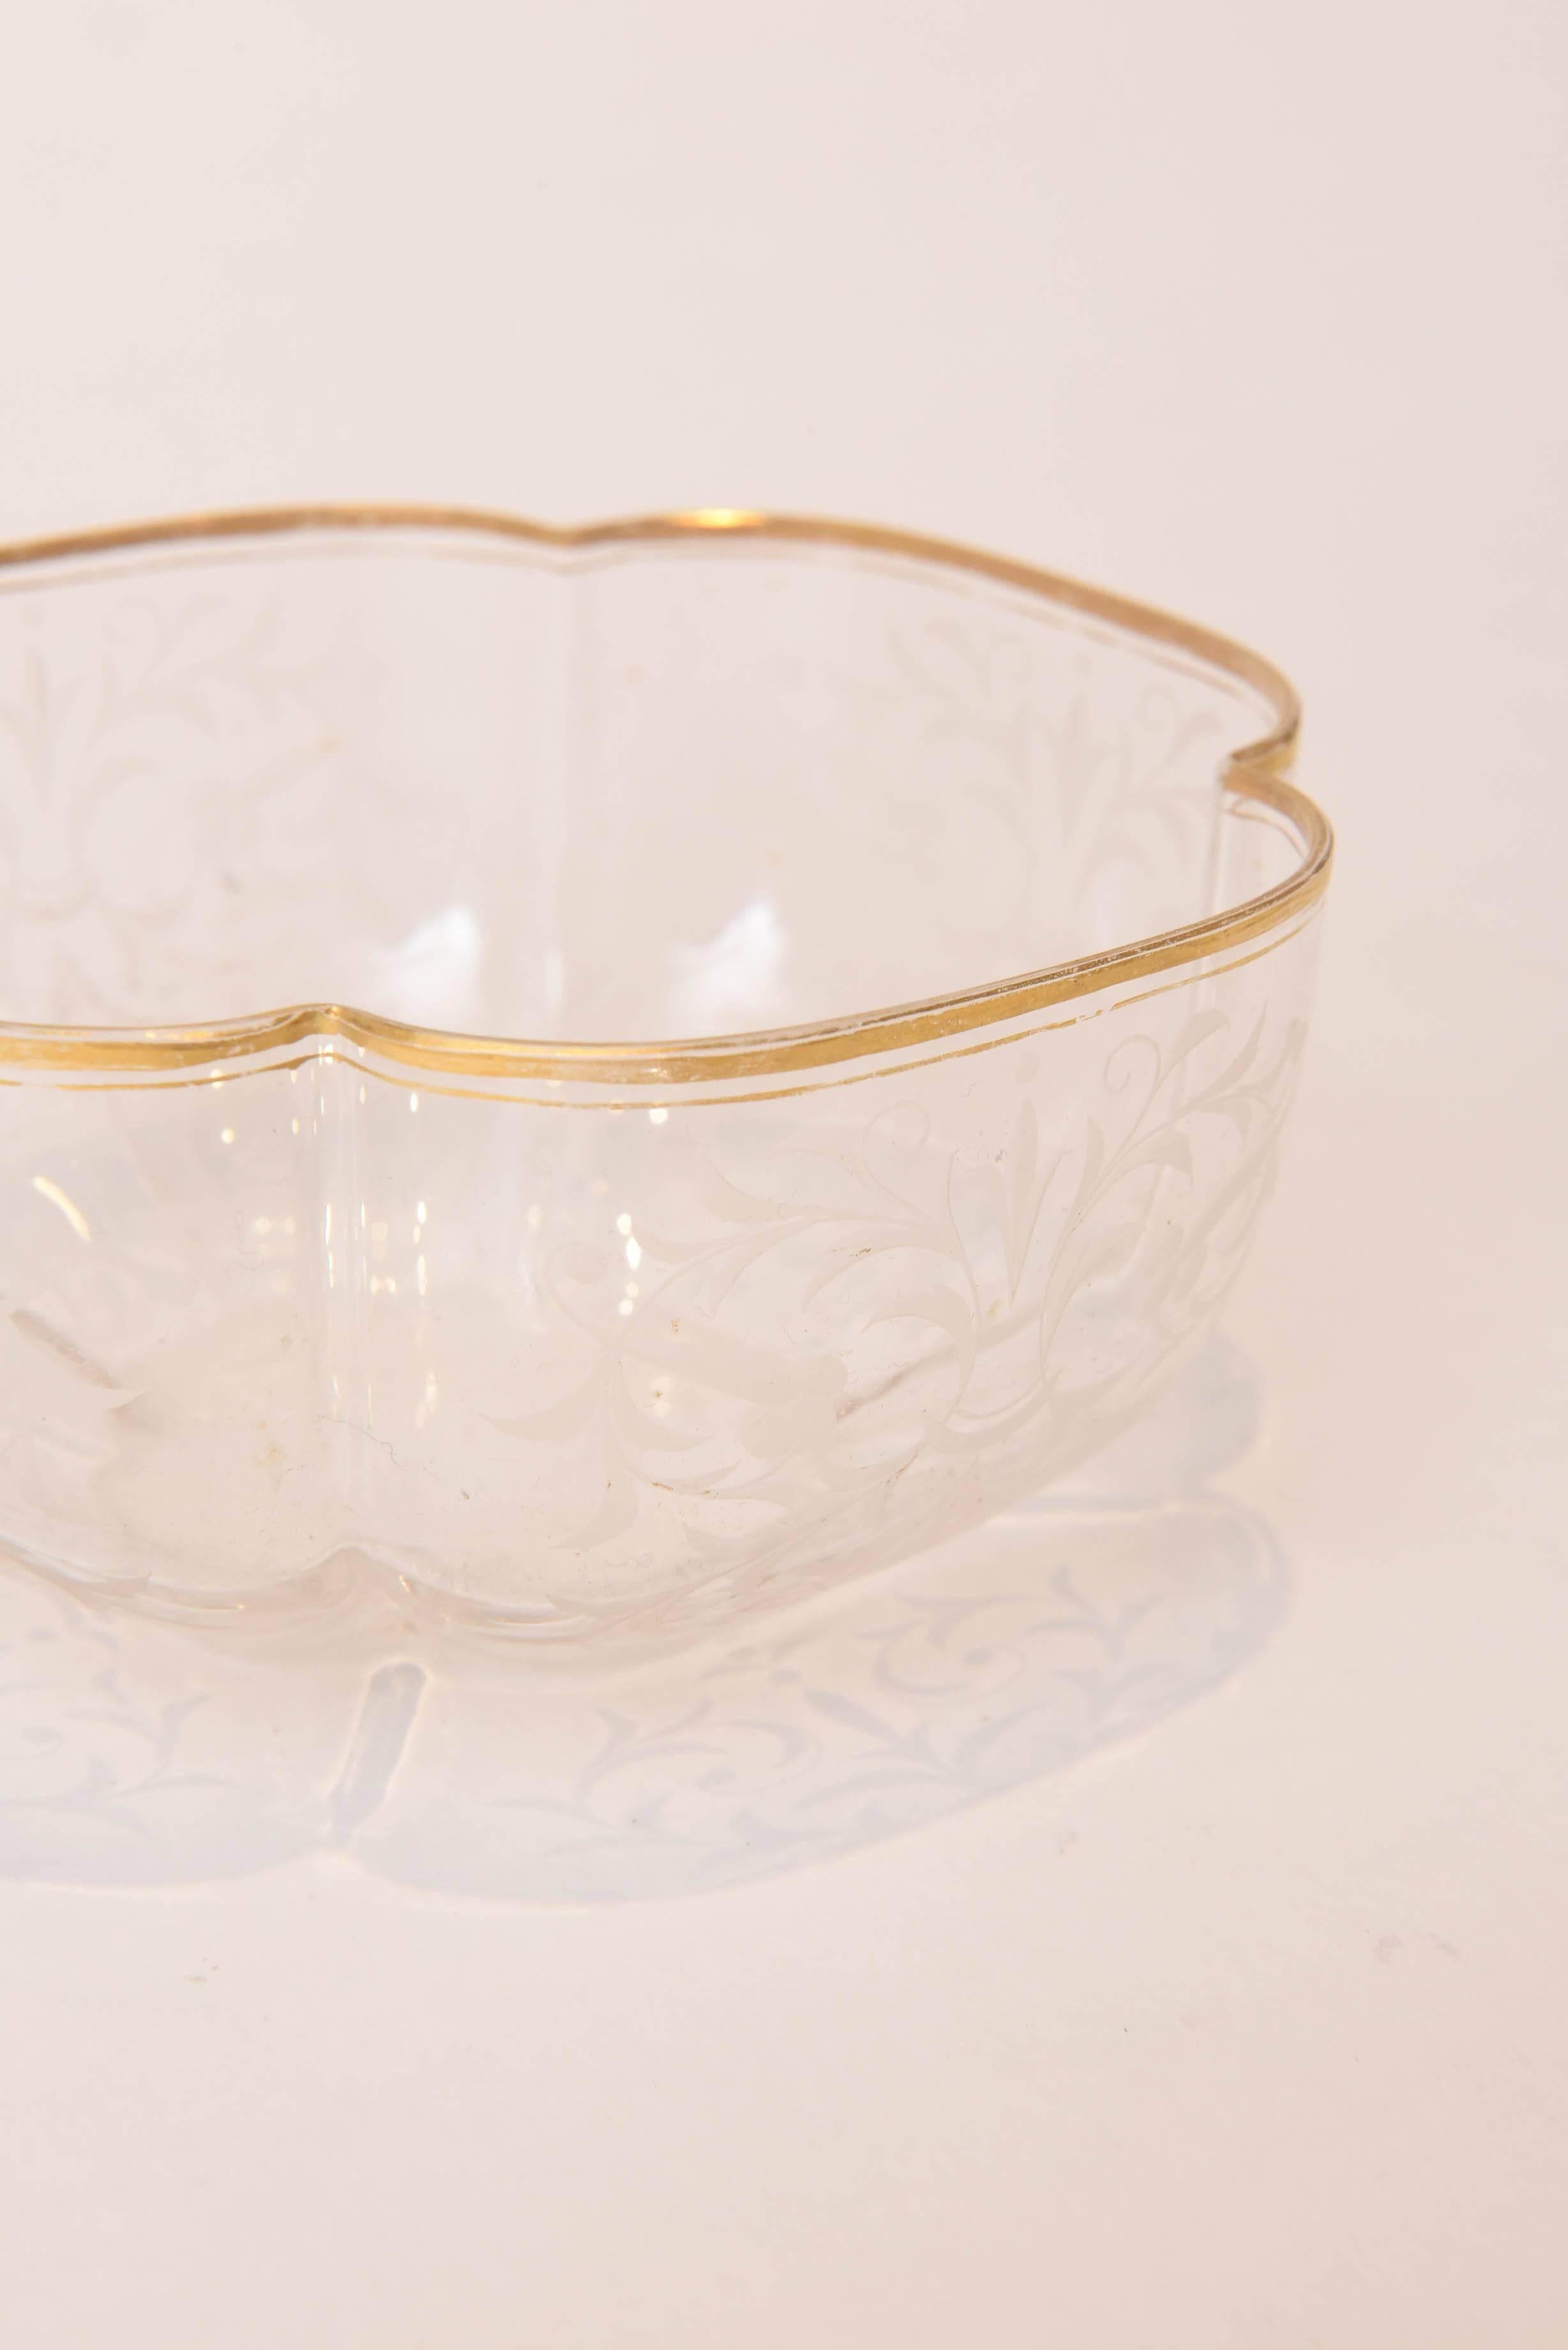 Late 19th Century Ten Exquisite Sets of Antique Moser Quatre Foil Bowls with Underplates